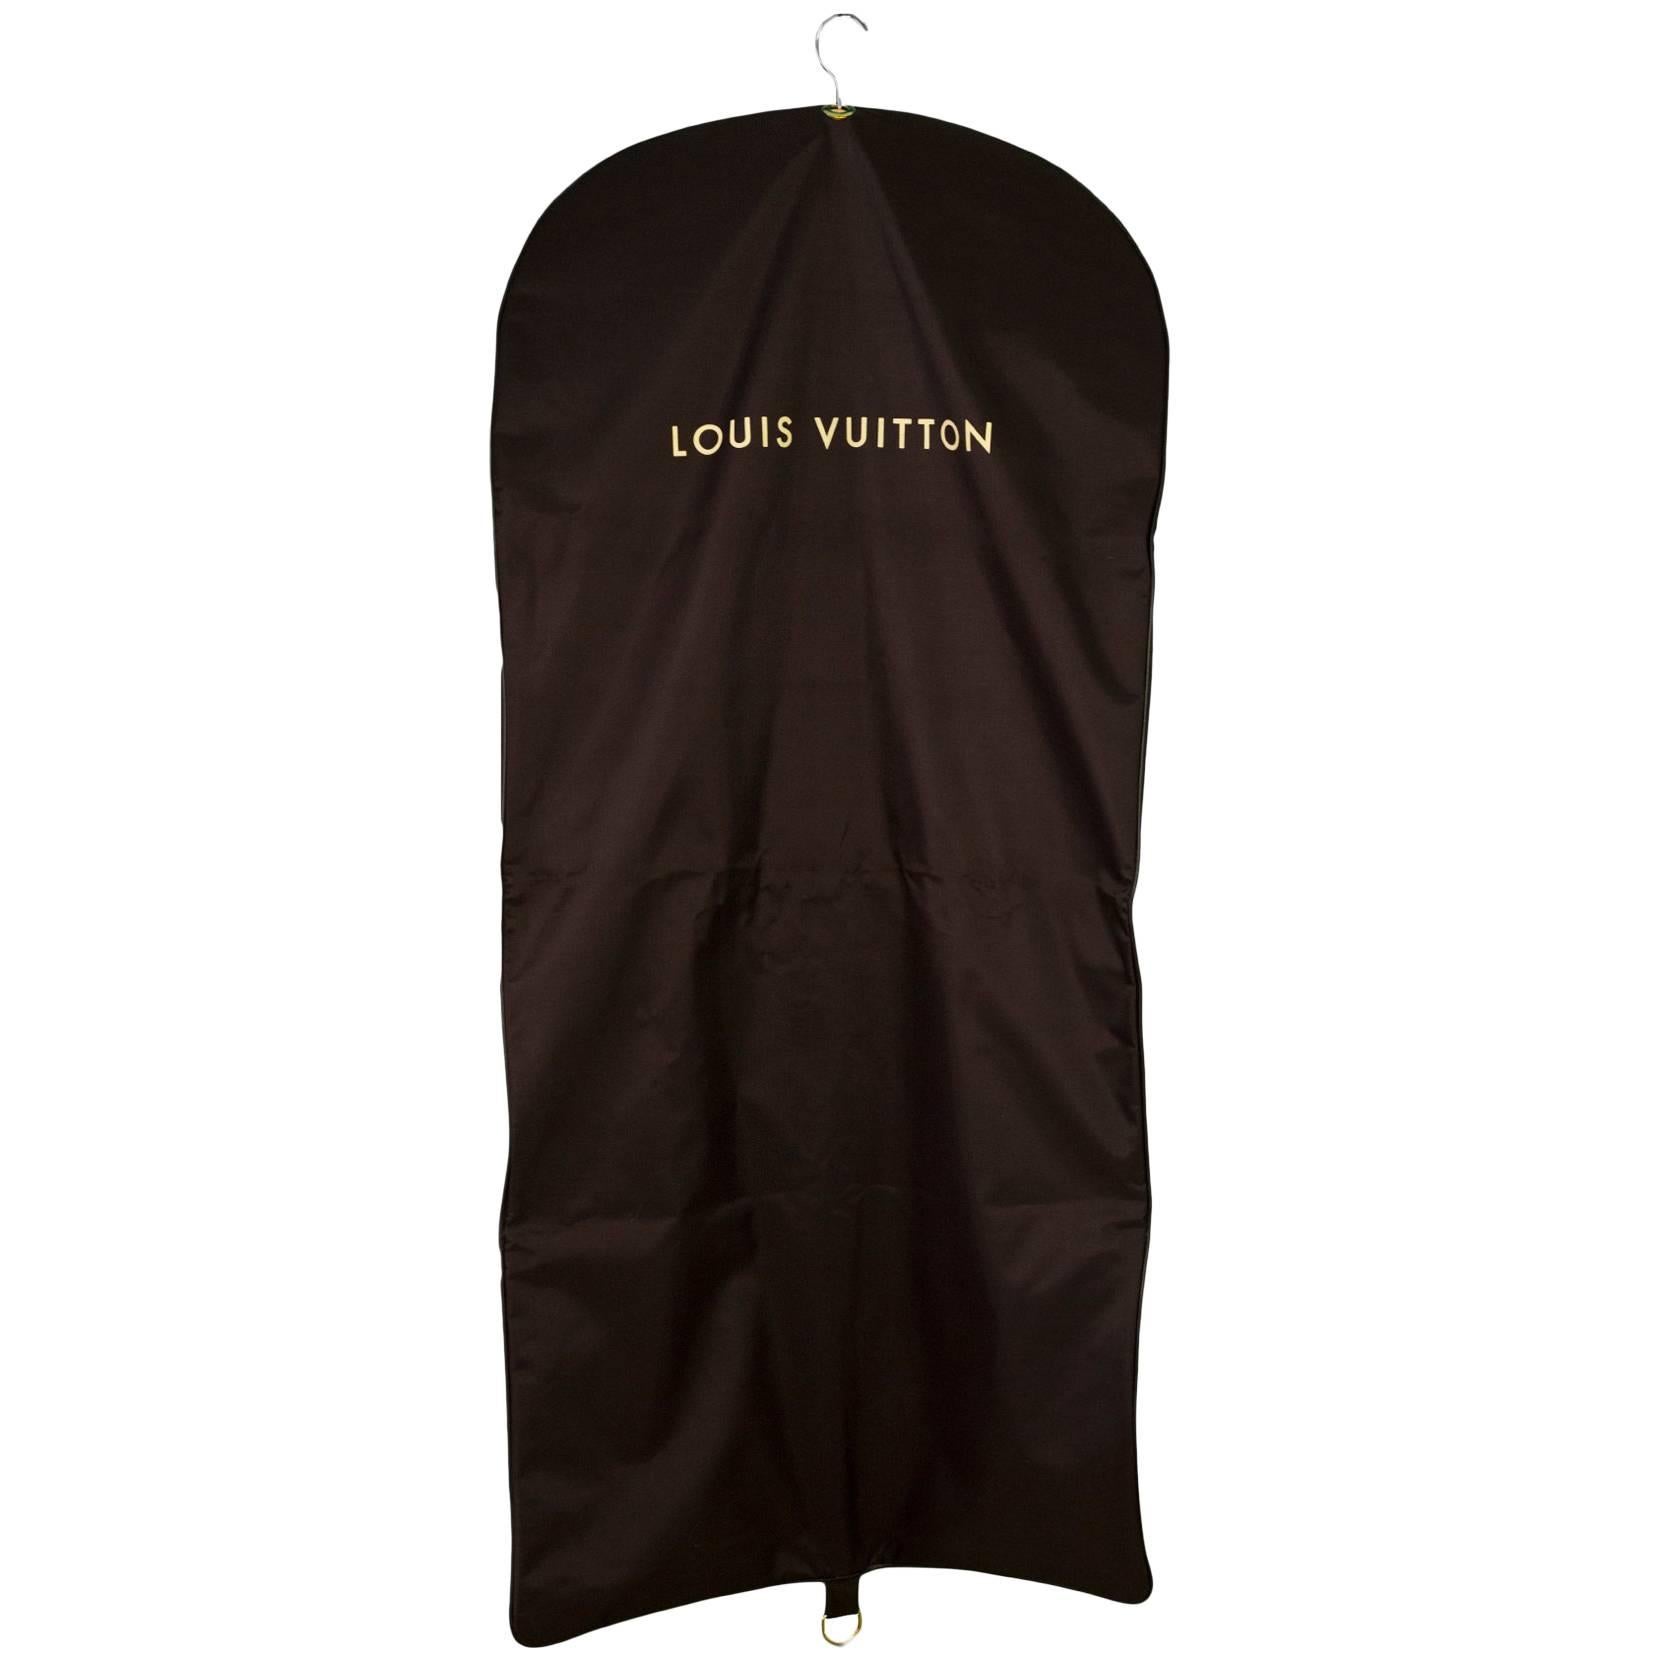 Louis Vuitton Brown Heavy Nylon Garment Bag with Beige Wooden Hanger